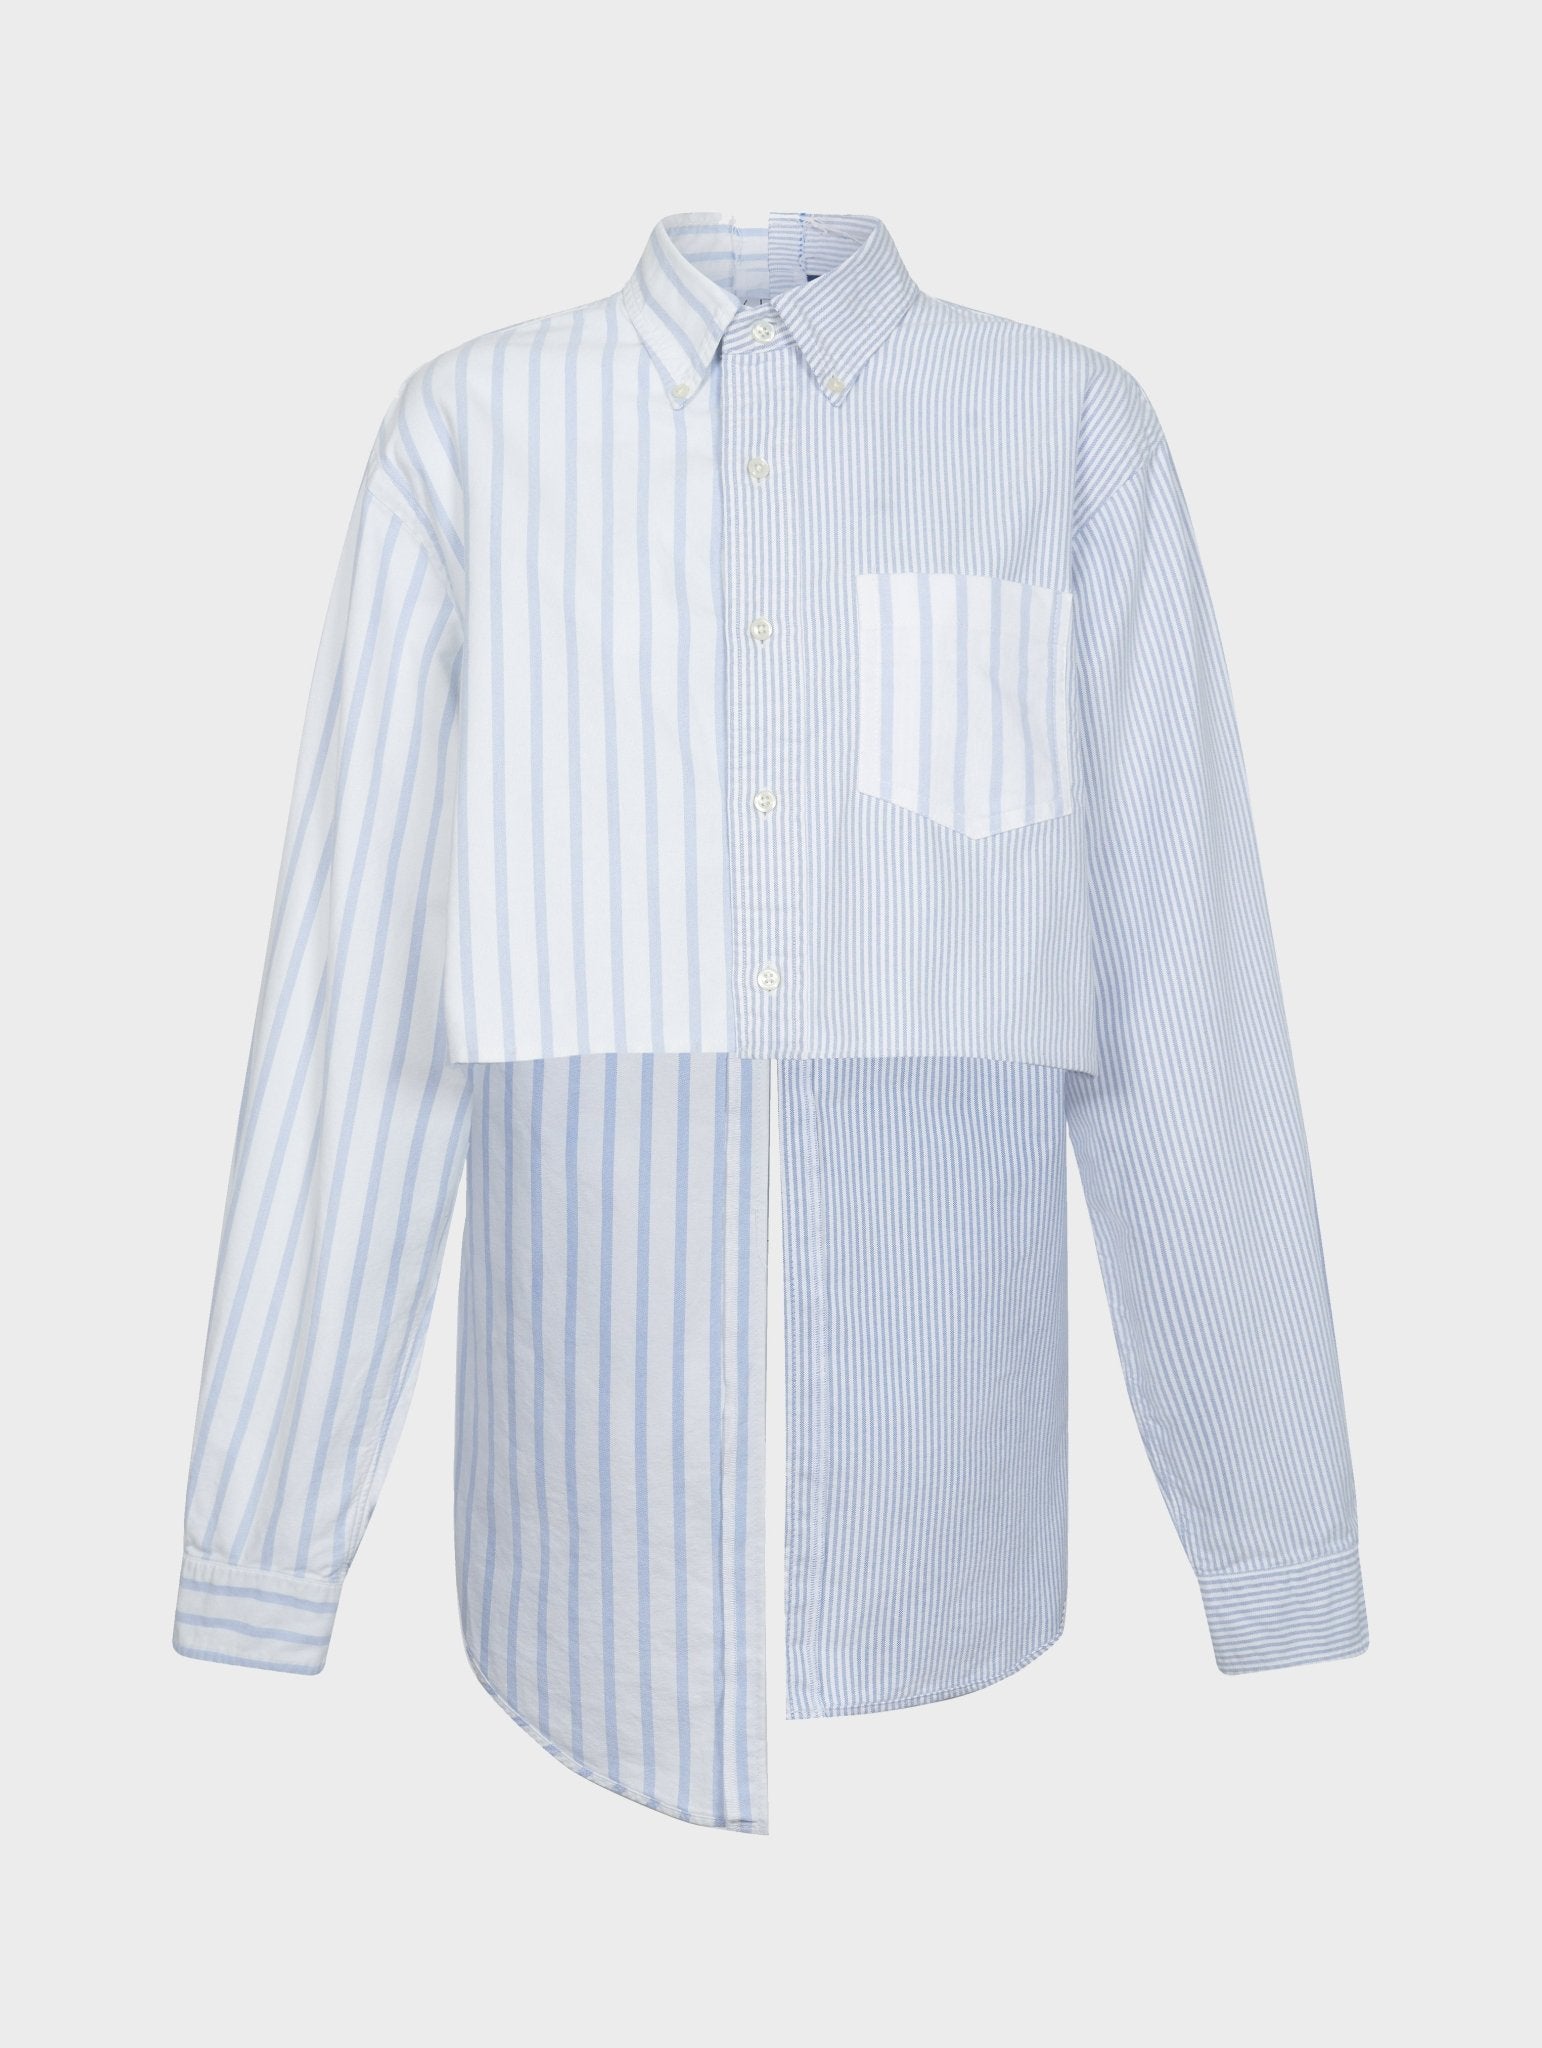 Cindy Shirt Stripe Brushed Cotton Light Blue